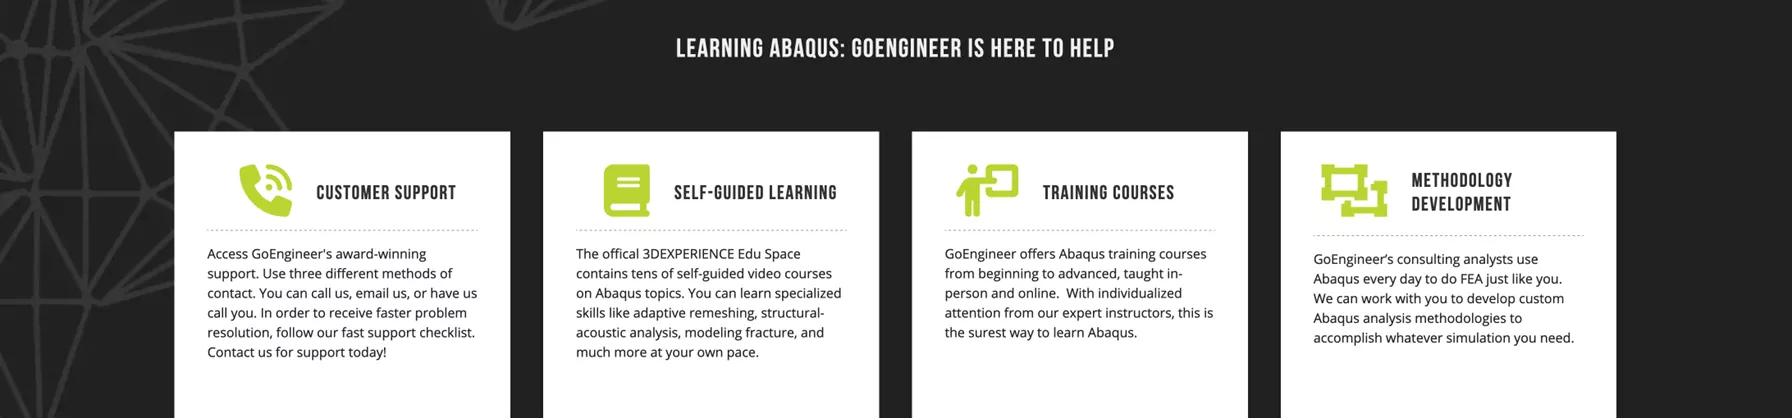 Learn Abaqus with GoEngineer 